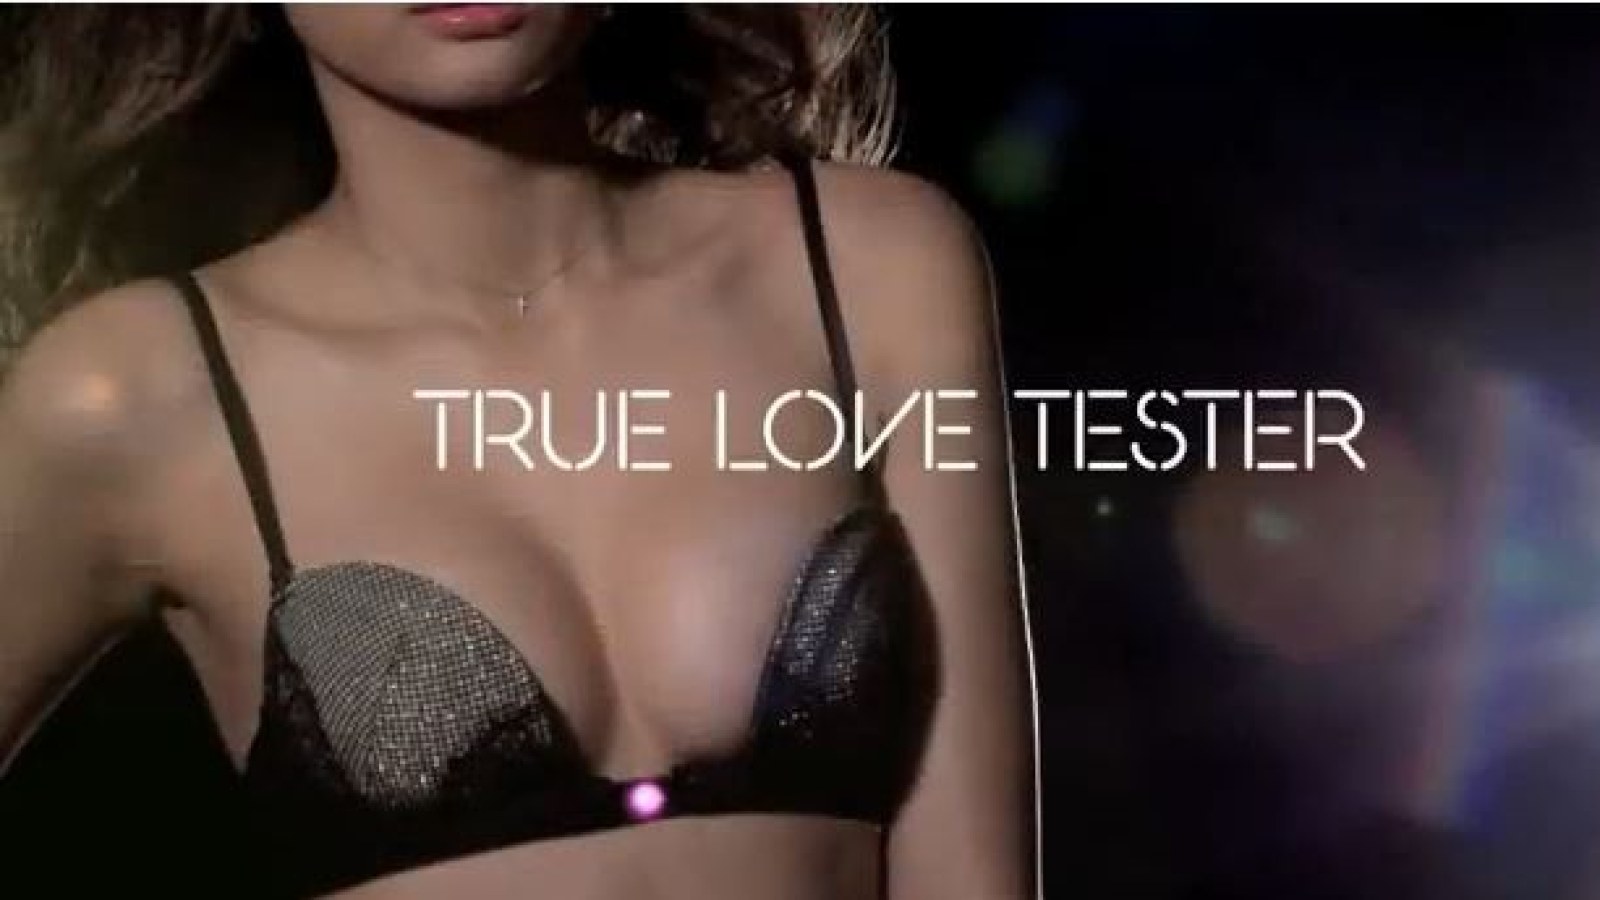 When Bra Size Matters Least: High-Tech 'True Love Tester' Bra Only